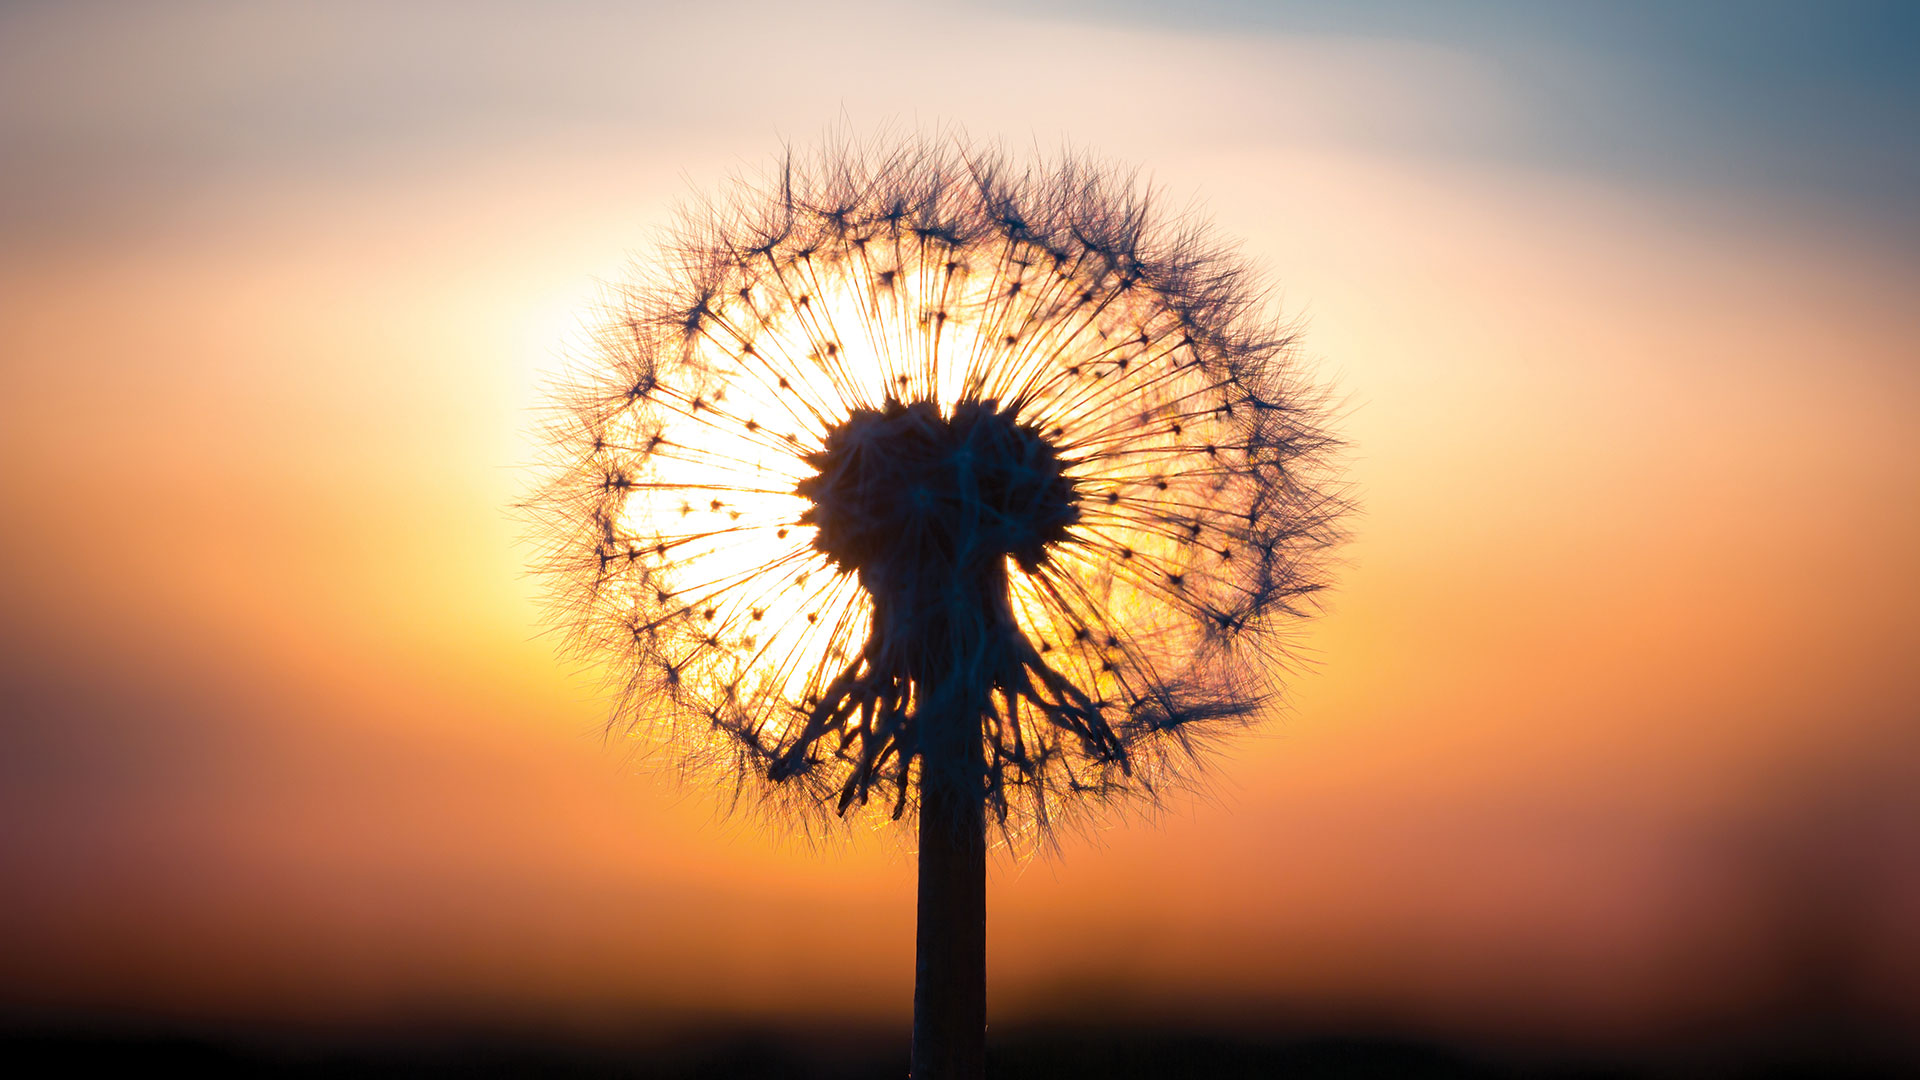 Dandelion silhoette in sunset